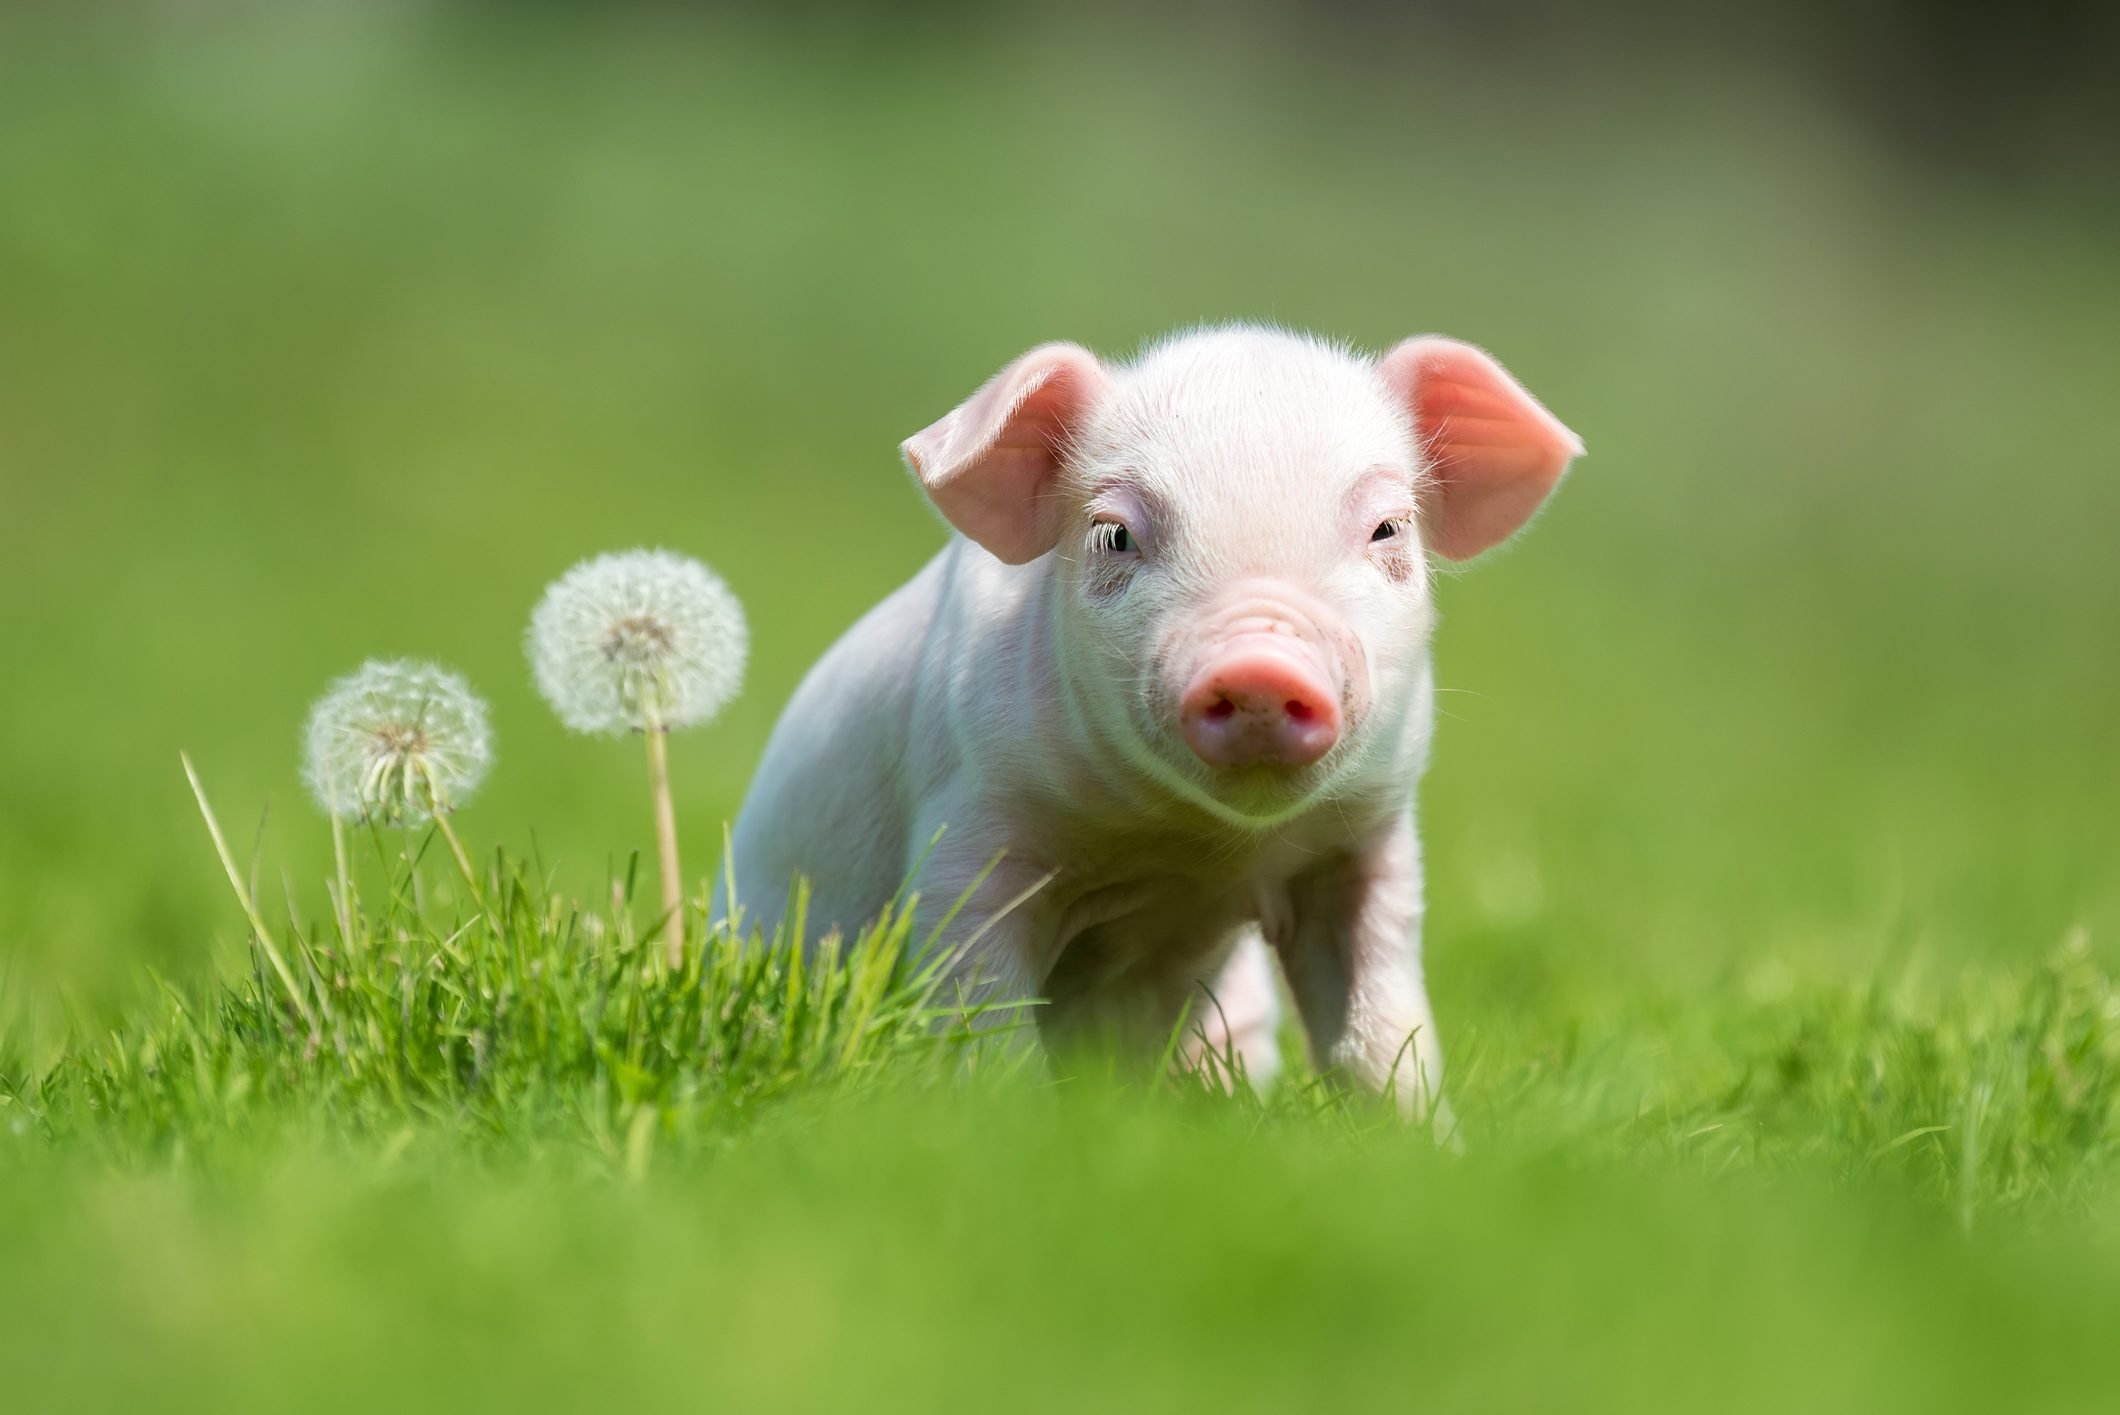 40 Adorable Pig Pictures To Make You Smile | Reader'S Digest